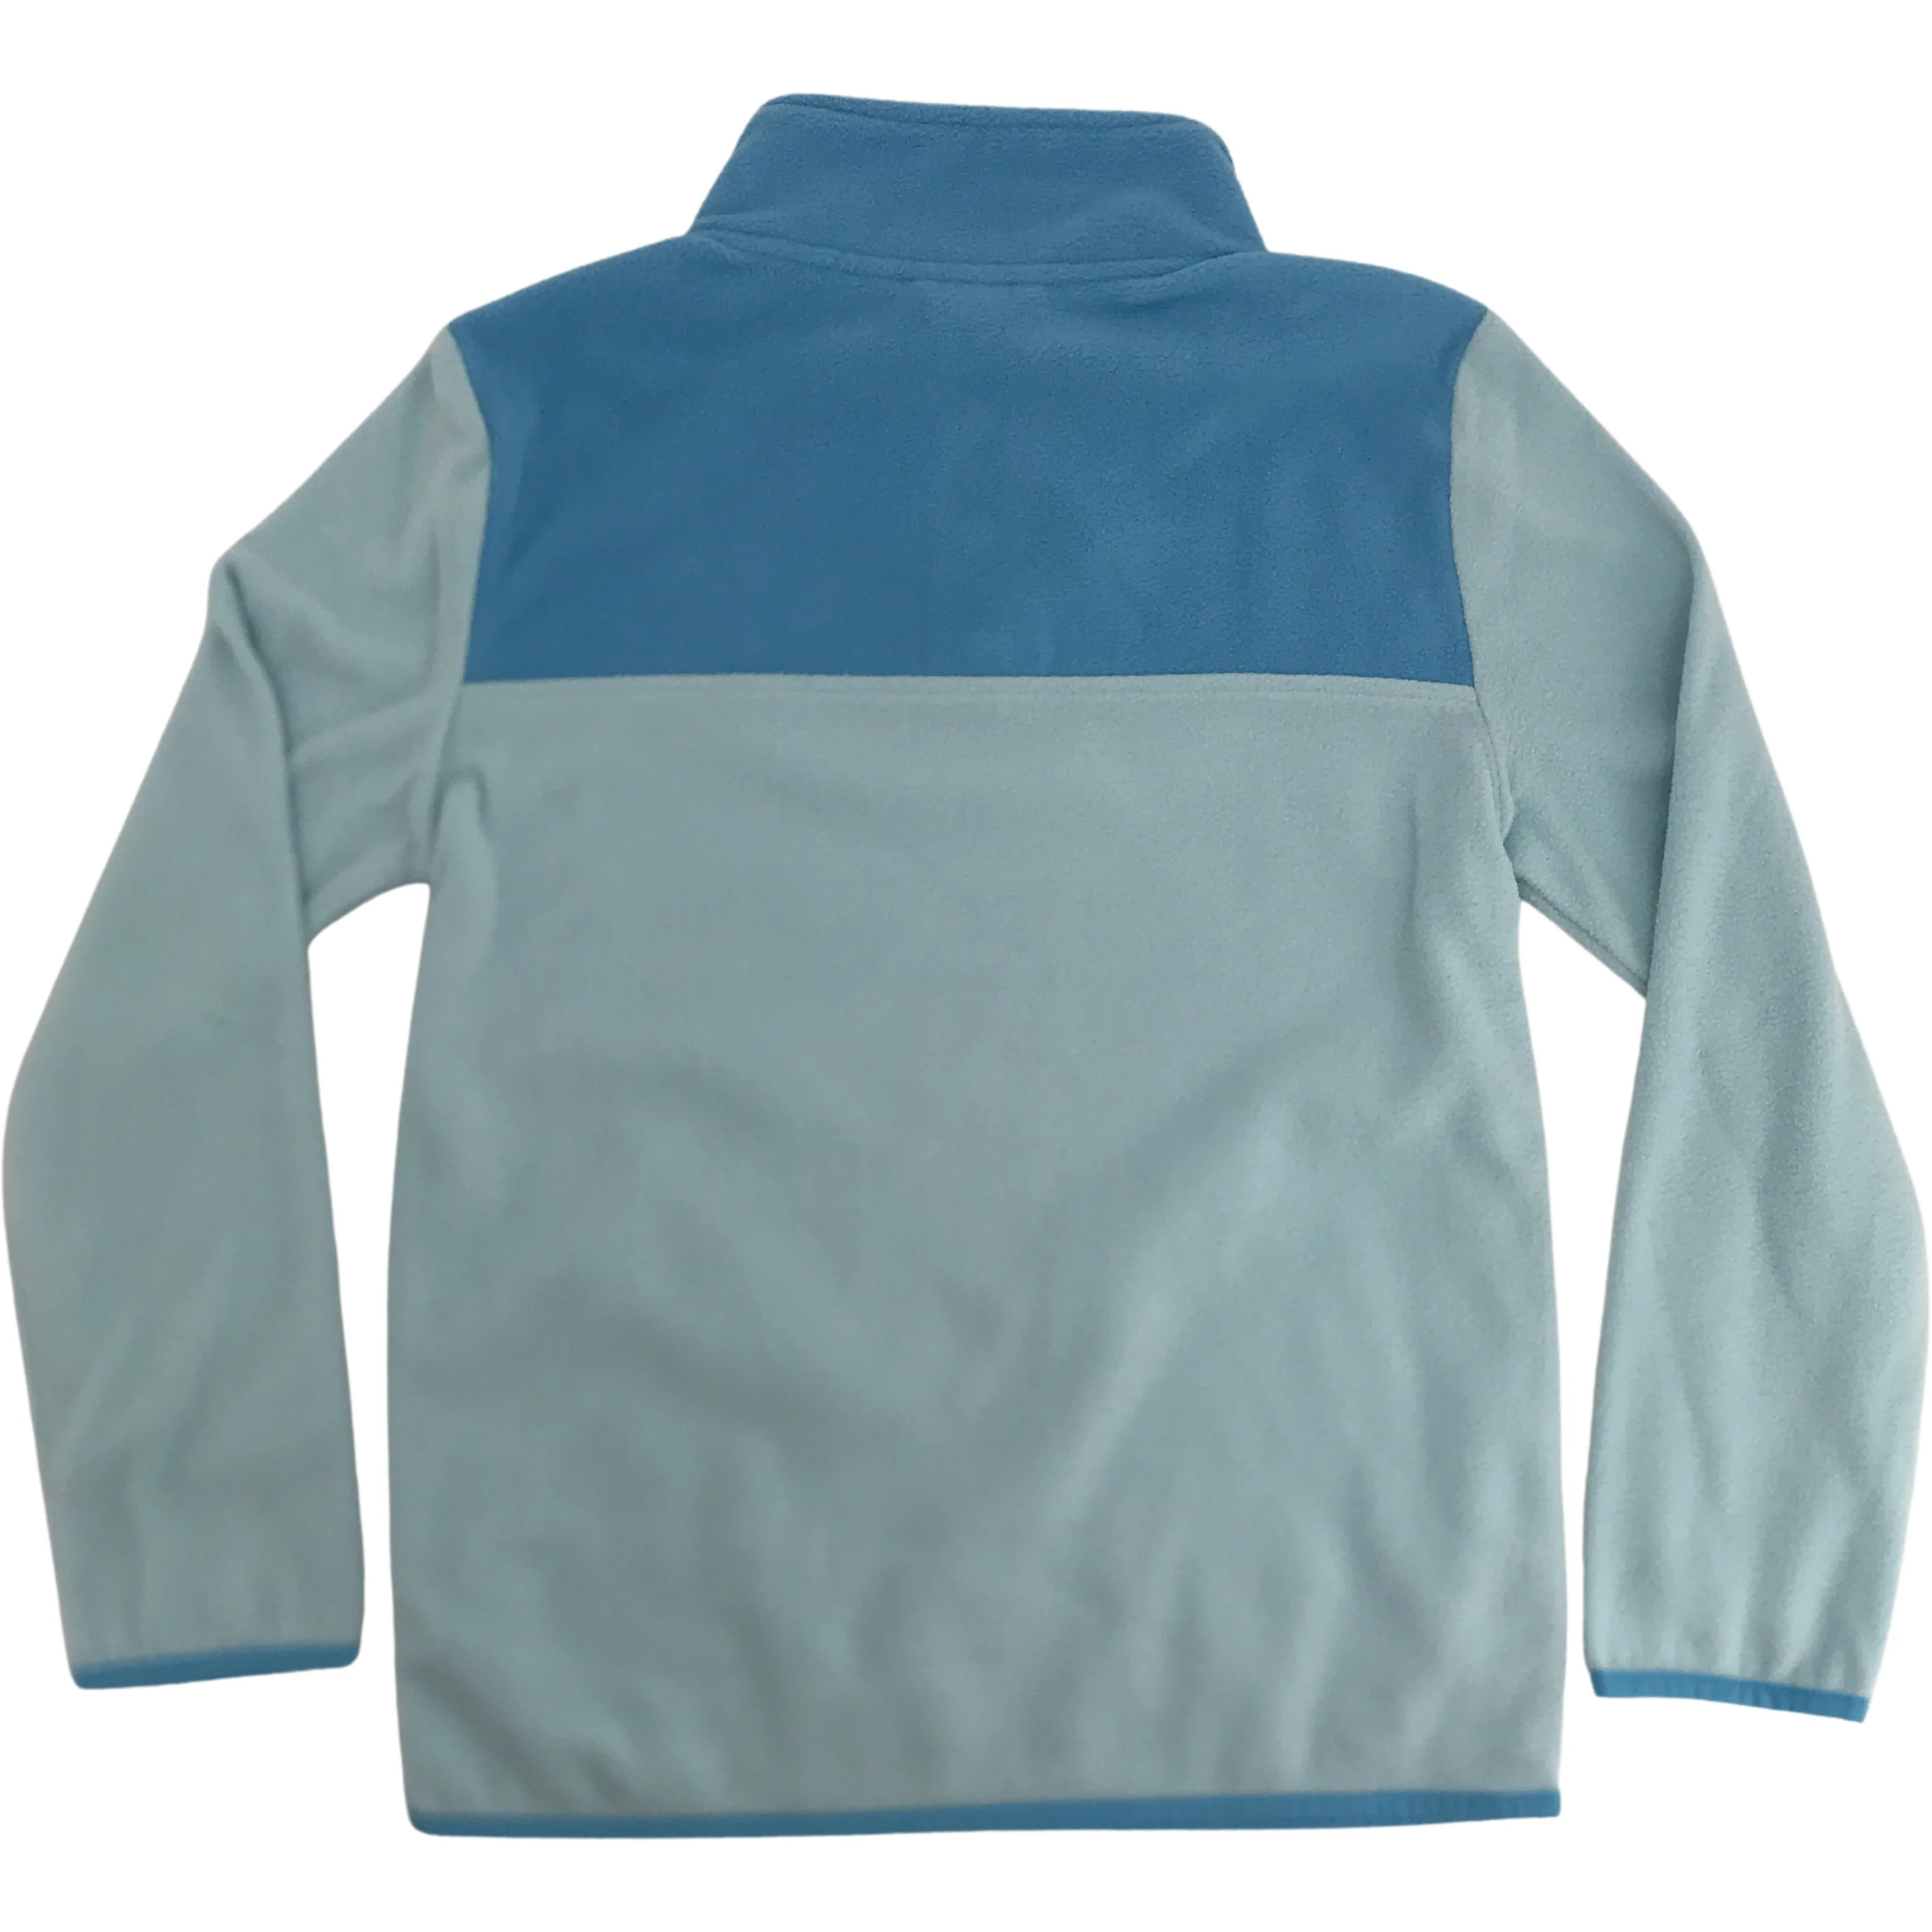 Puma Children's Sweater: Pull On Sweater / Blue / XLarge (14 /16)